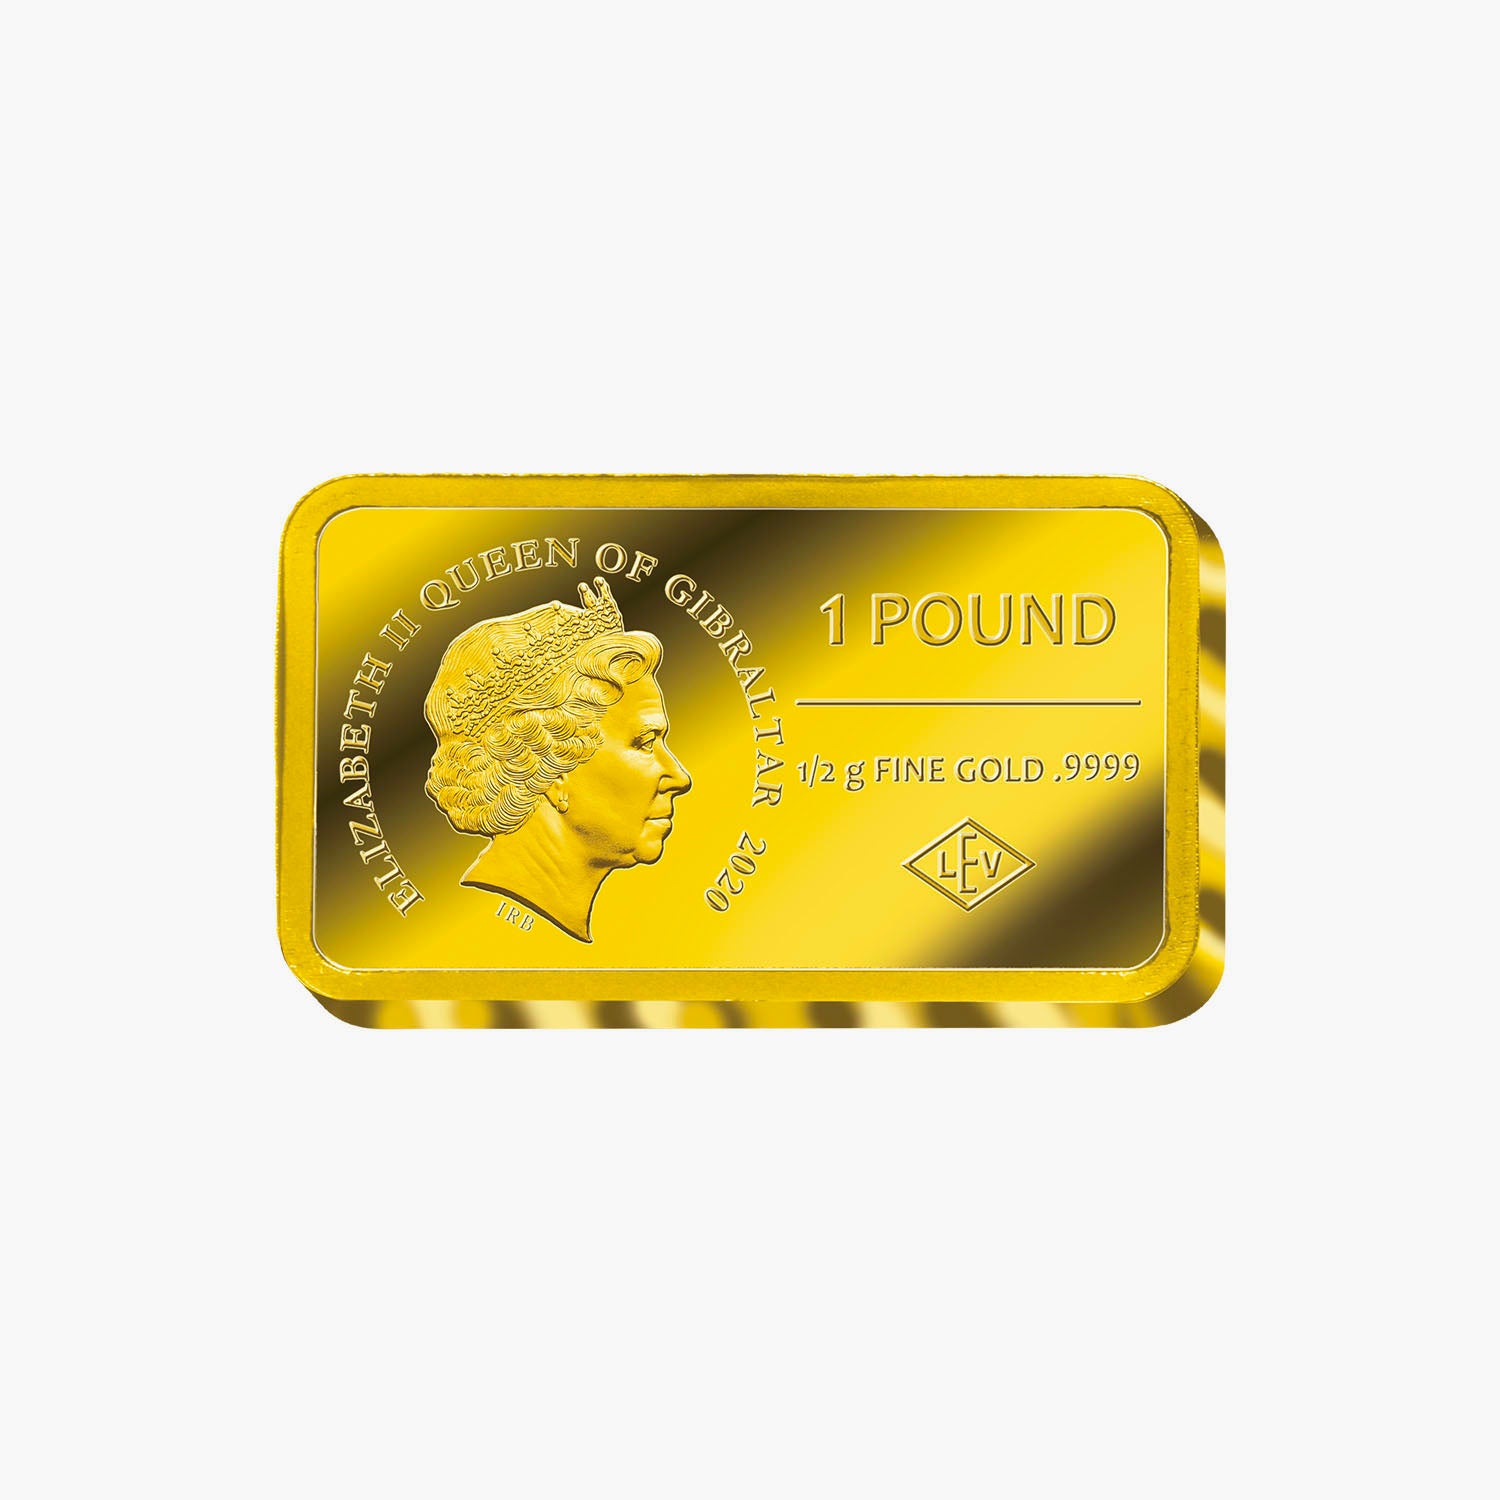 EURO 2020 Glasgow £1 Gold Bar Coin